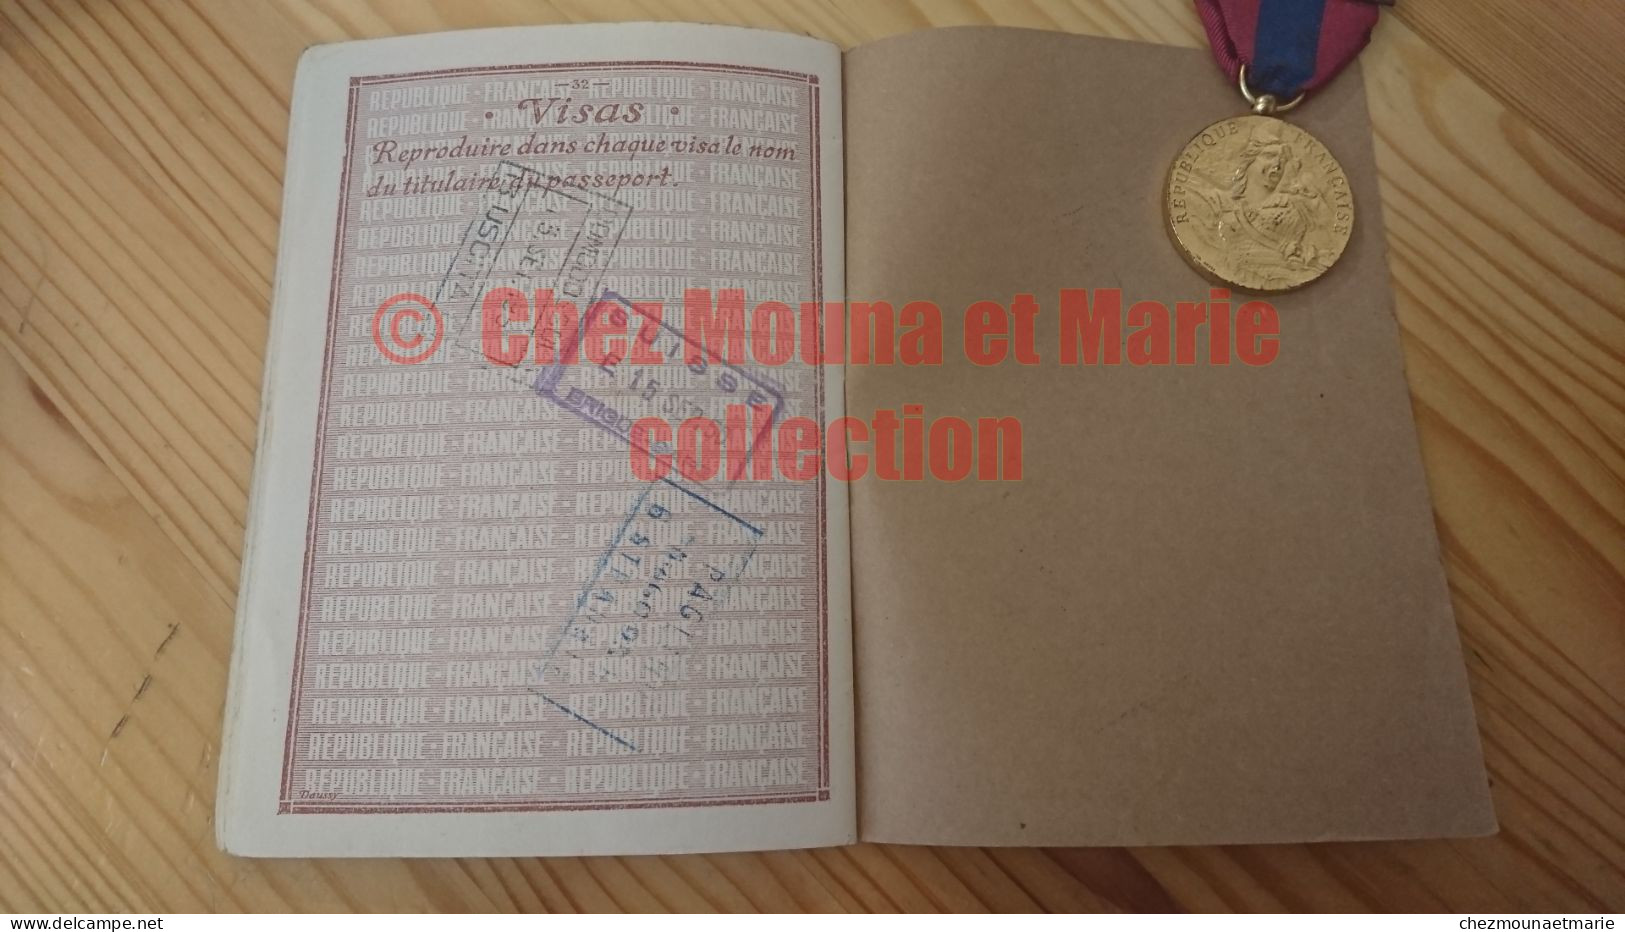 1950 PASSEPORT BESANCON CERUTTI CHRISTIANE NEE EN 1933 OUVRIERE D USINE - Historische Dokumente